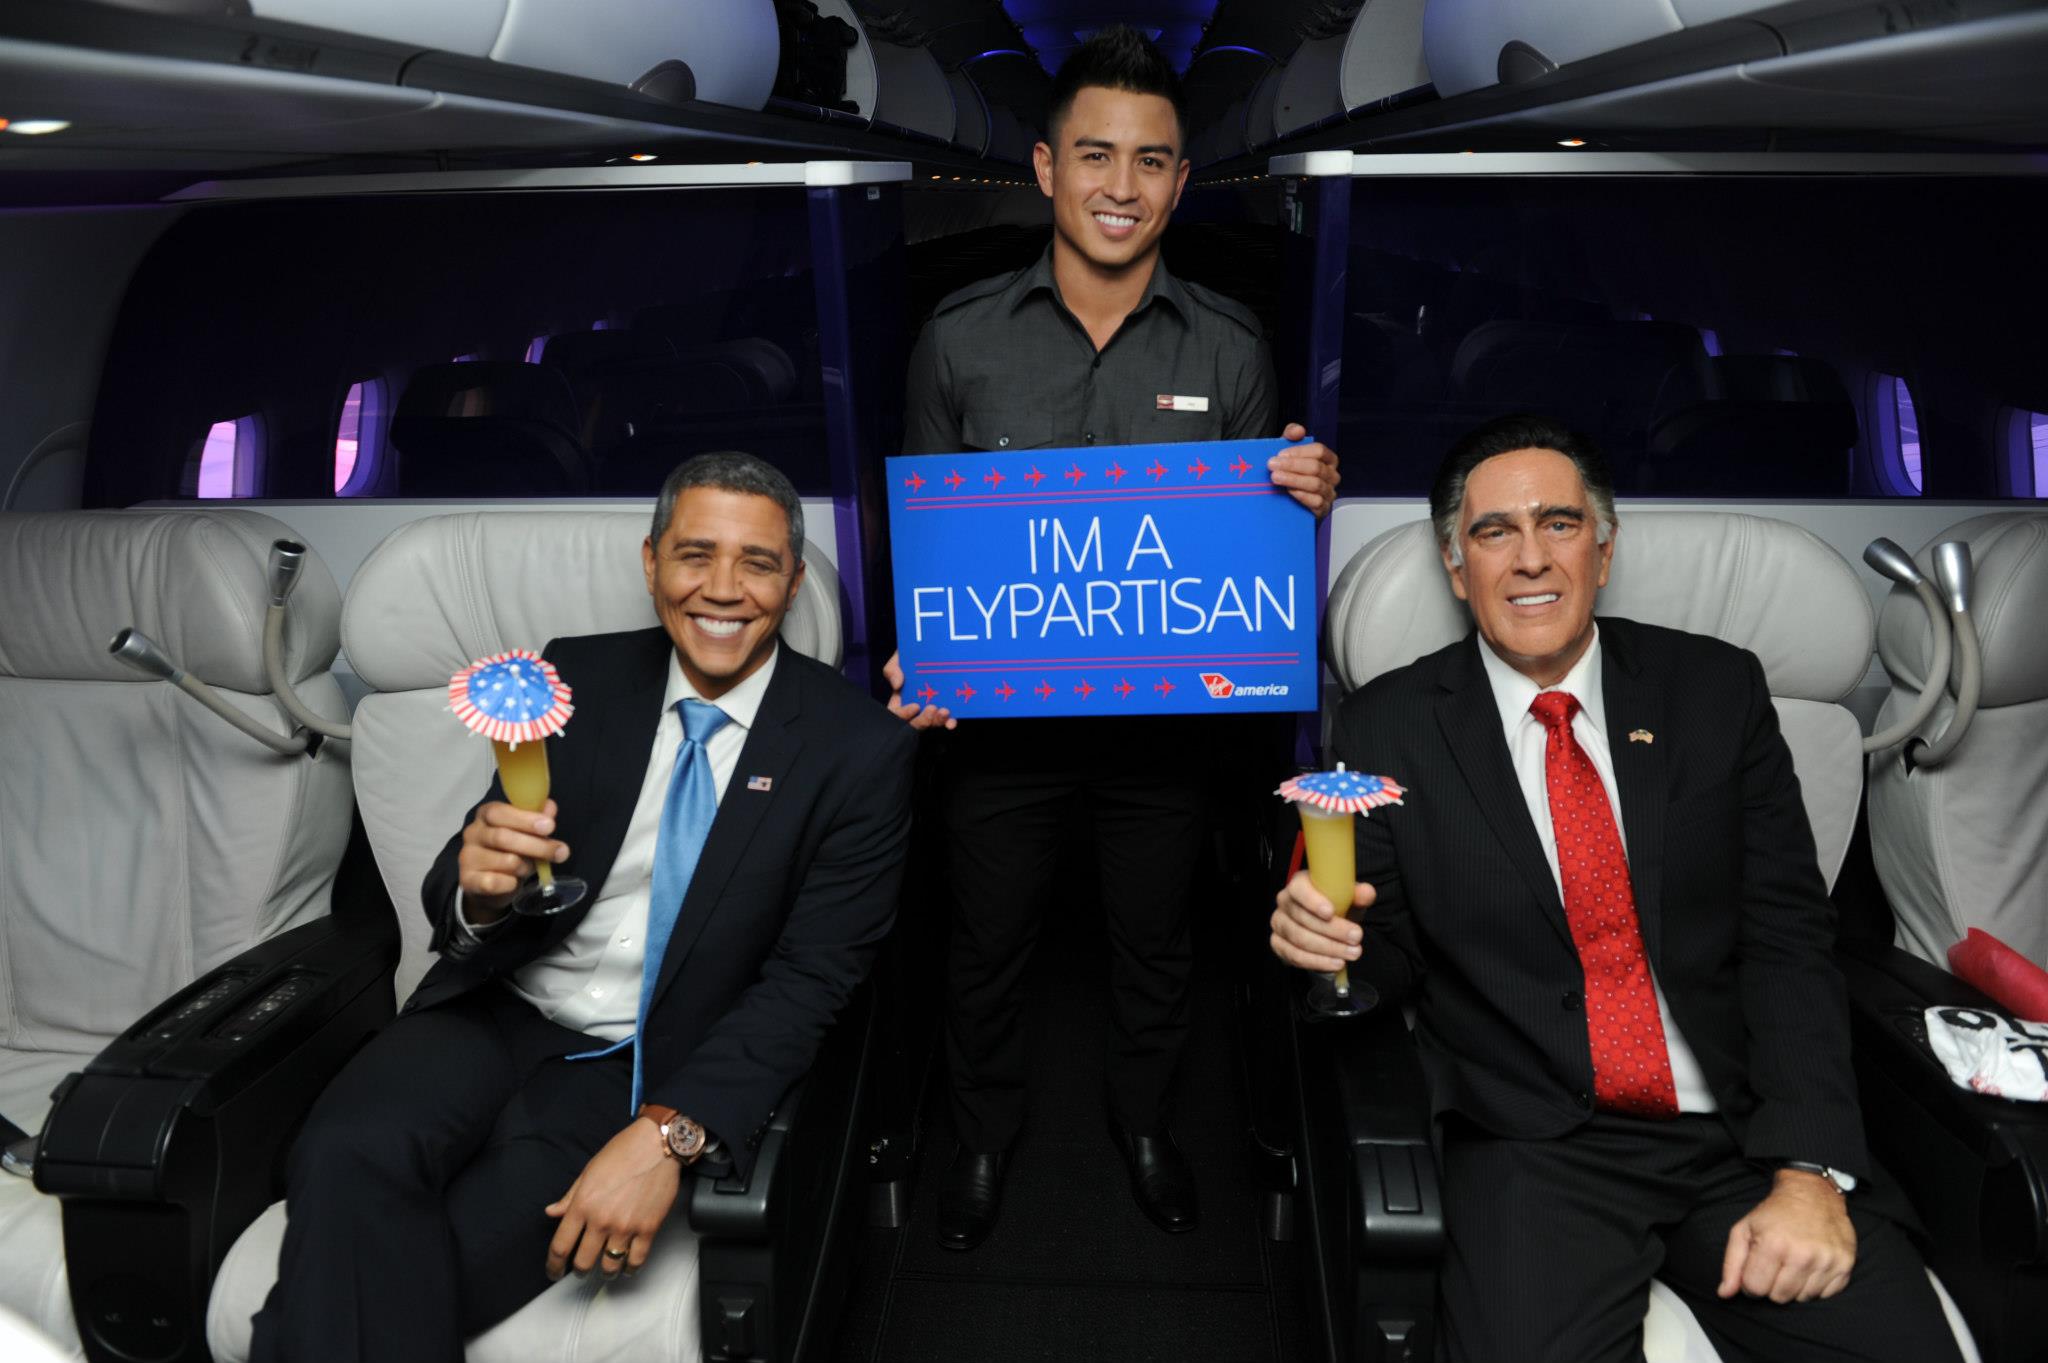 Obama and Romney impersonators rock the vote onboard Virgin America